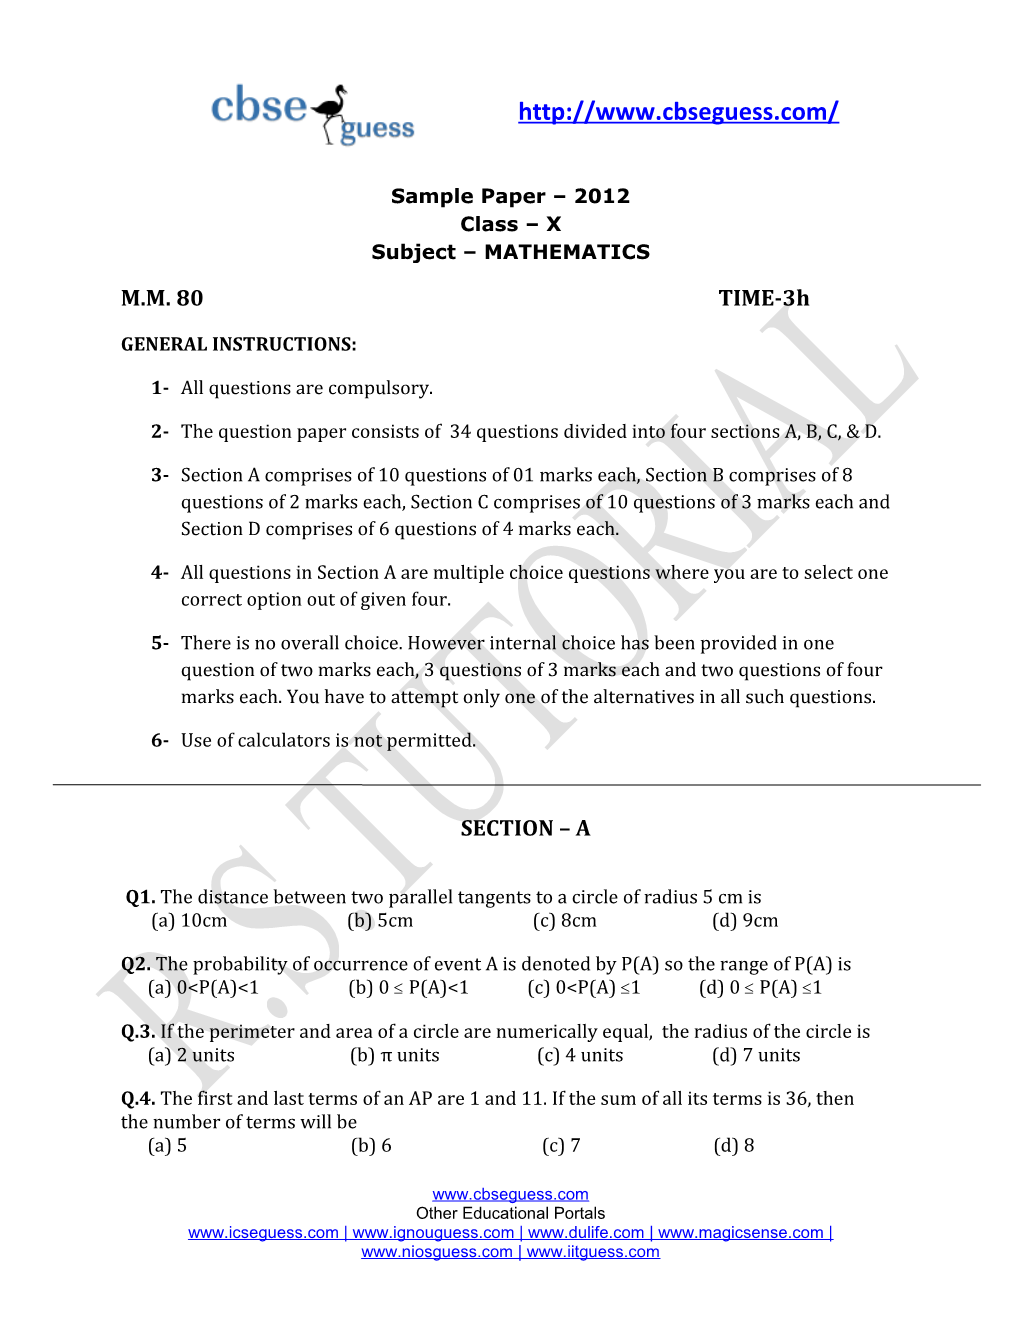 Sample Paper 2012 Class X Subject MATHEMATICS